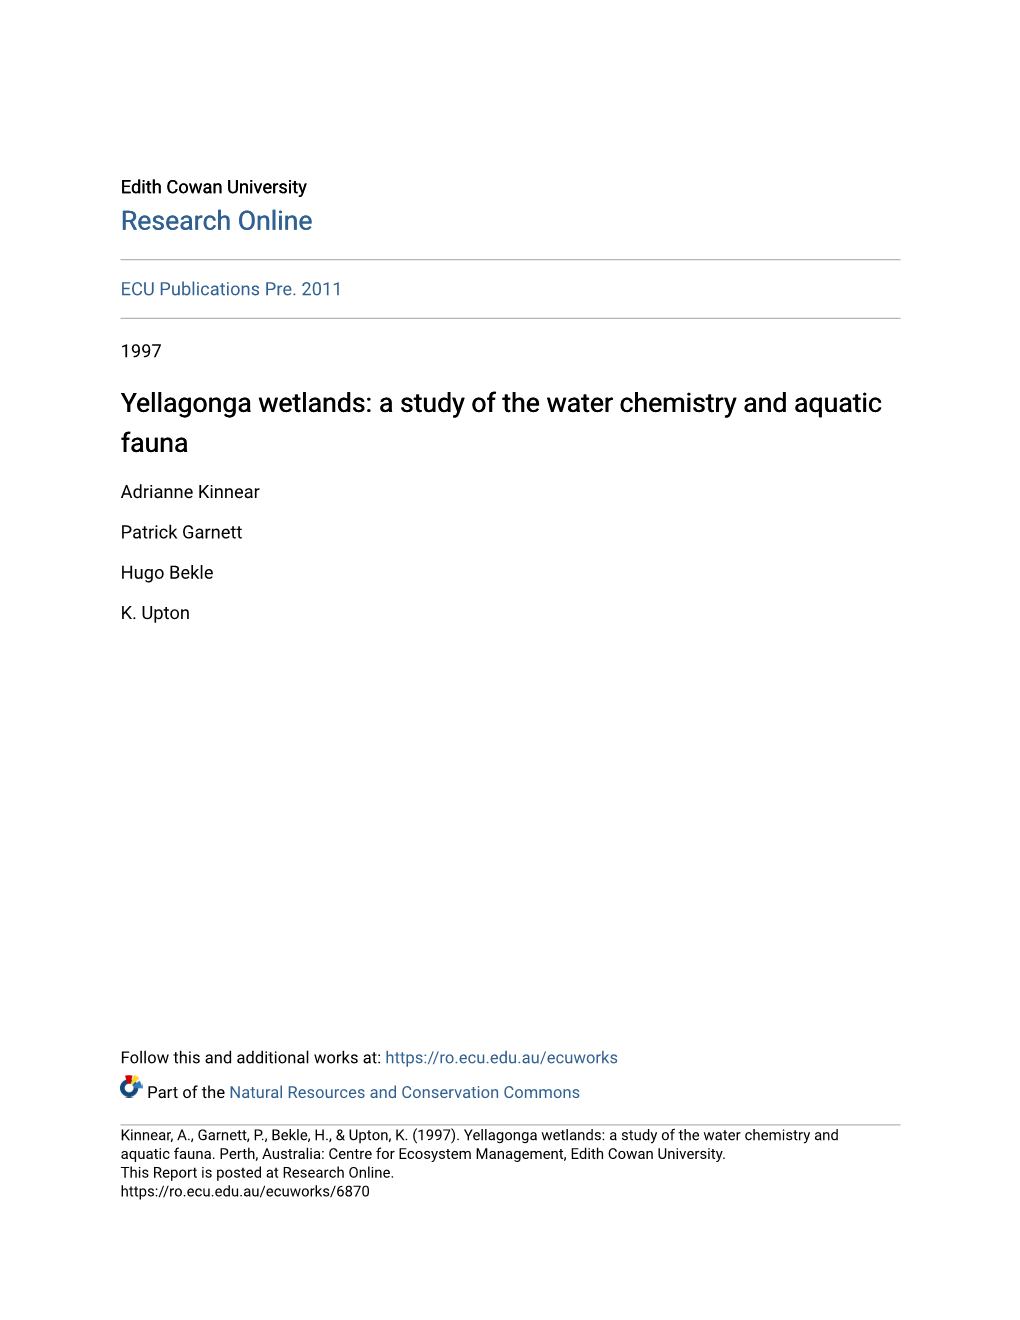 Yellagonga Wetlands: a Study of the Water Chemistry and Aquatic Fauna